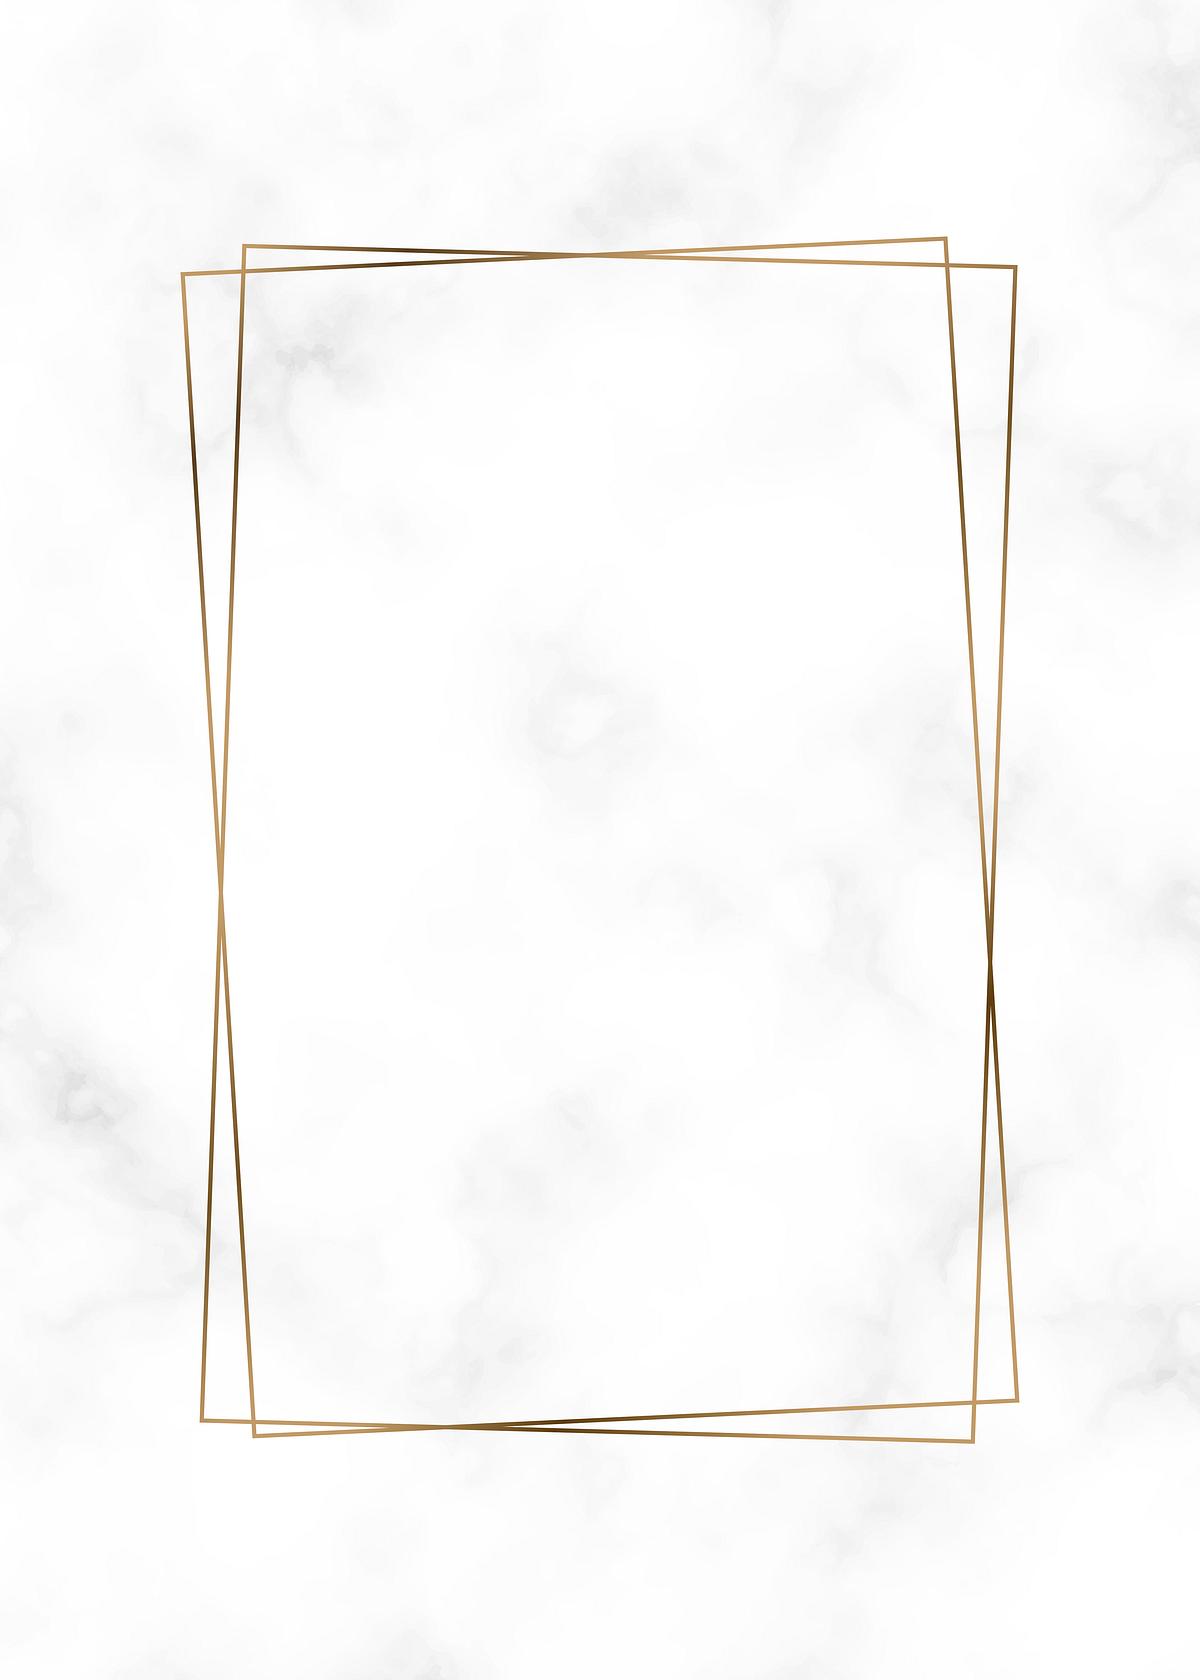 Download Blank golden frame | Royalty free stock illustration - 637069